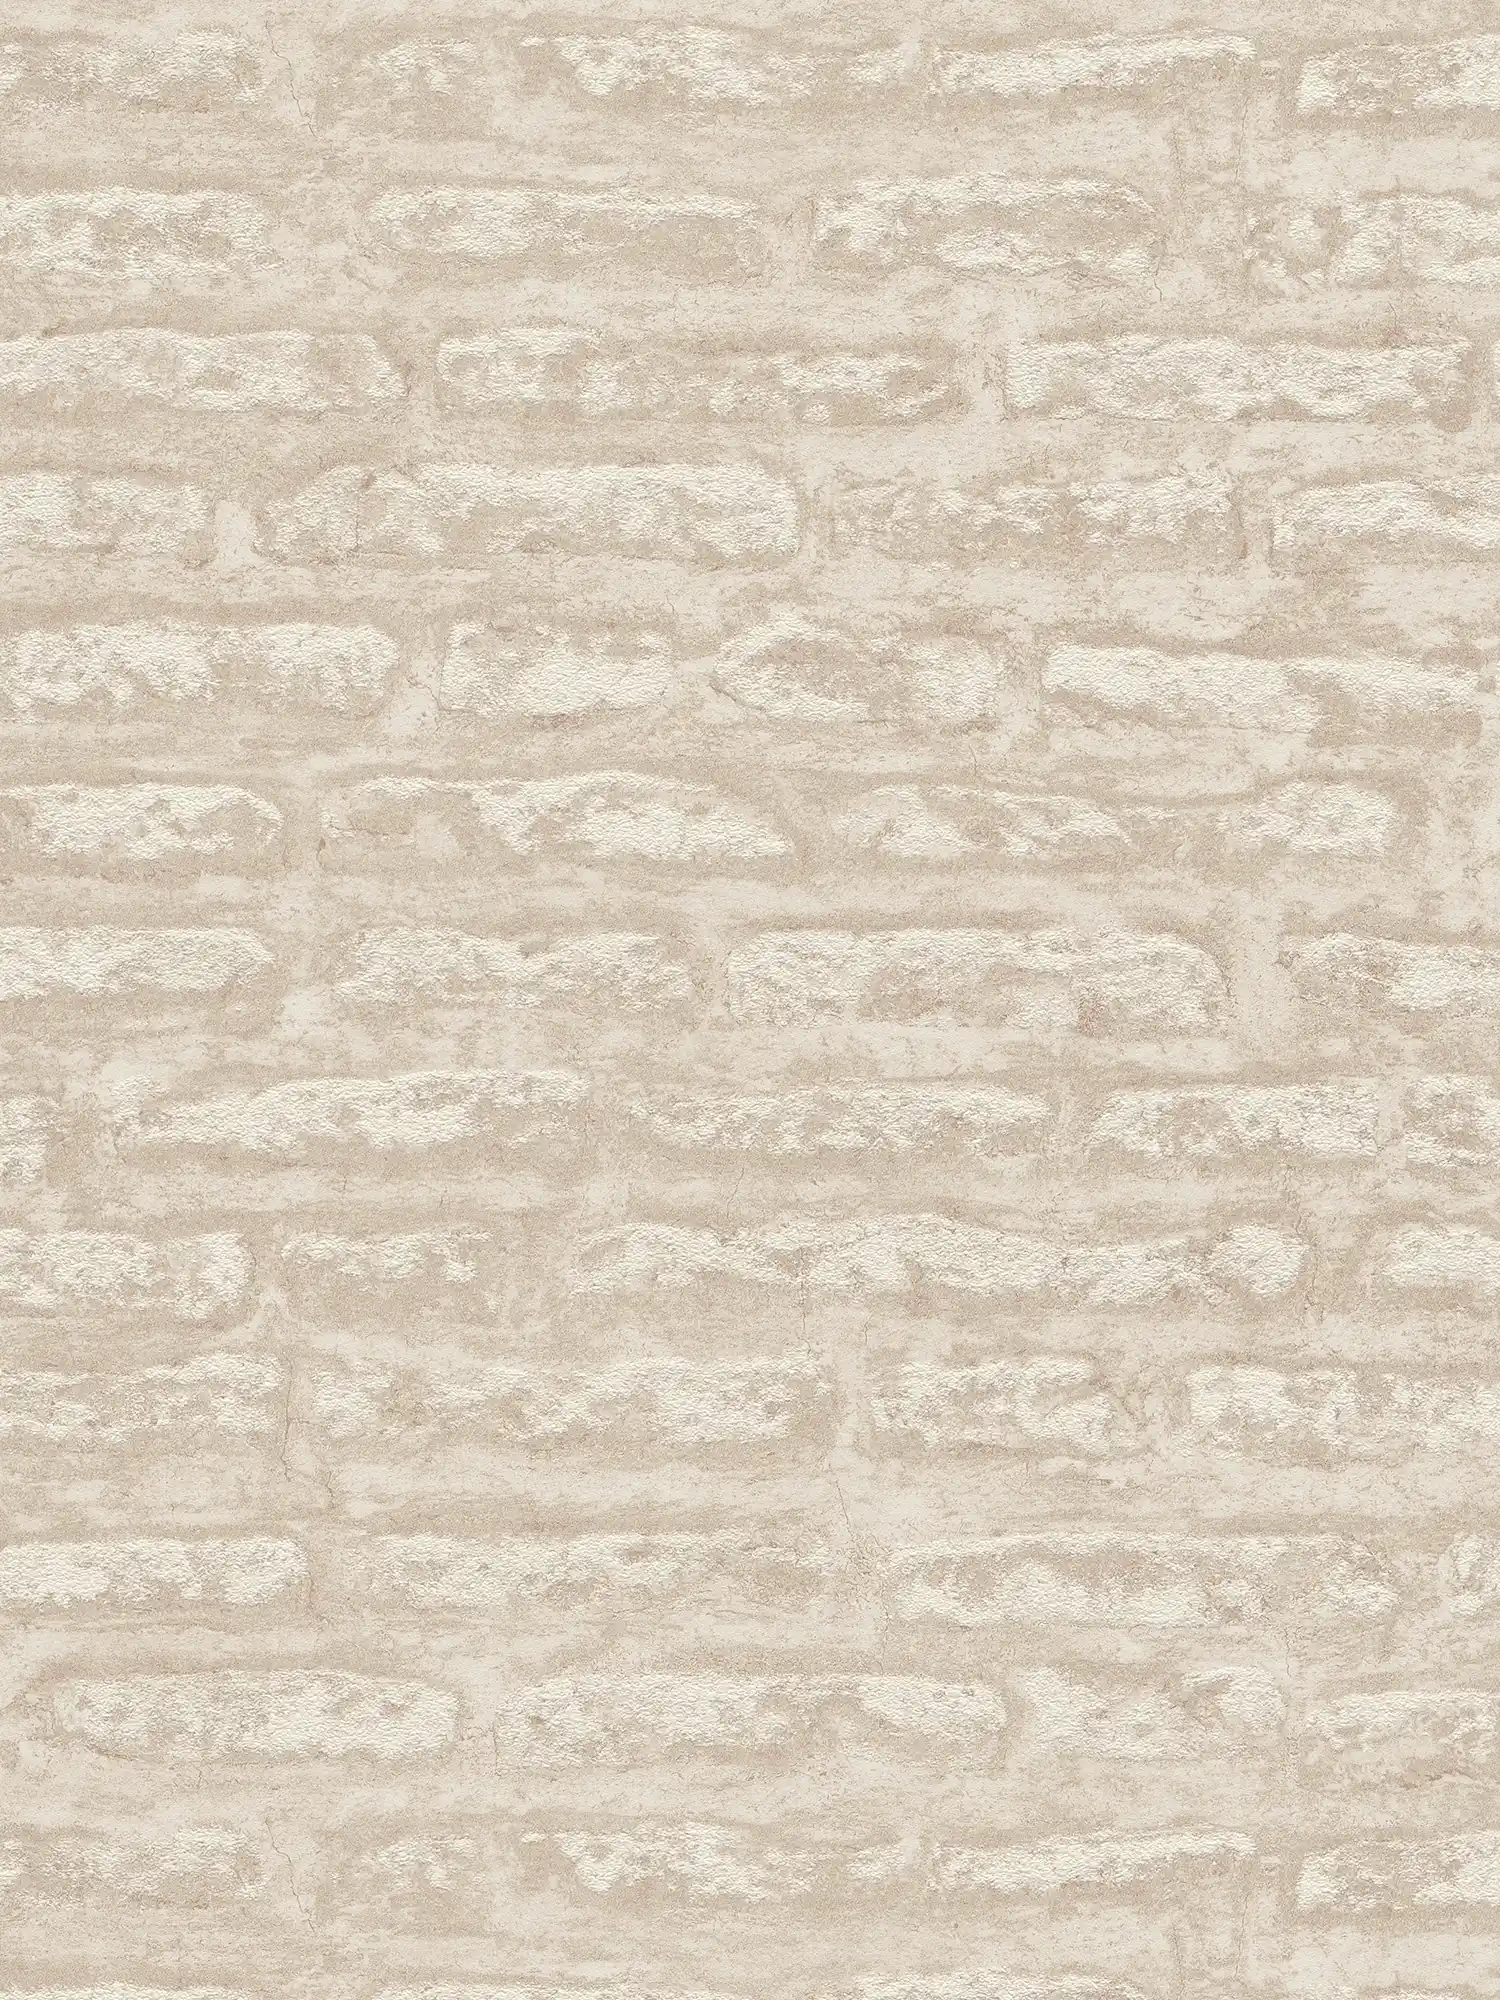 Gemusterte Tapete abstrakt matt – Hellbraun, Weiß
